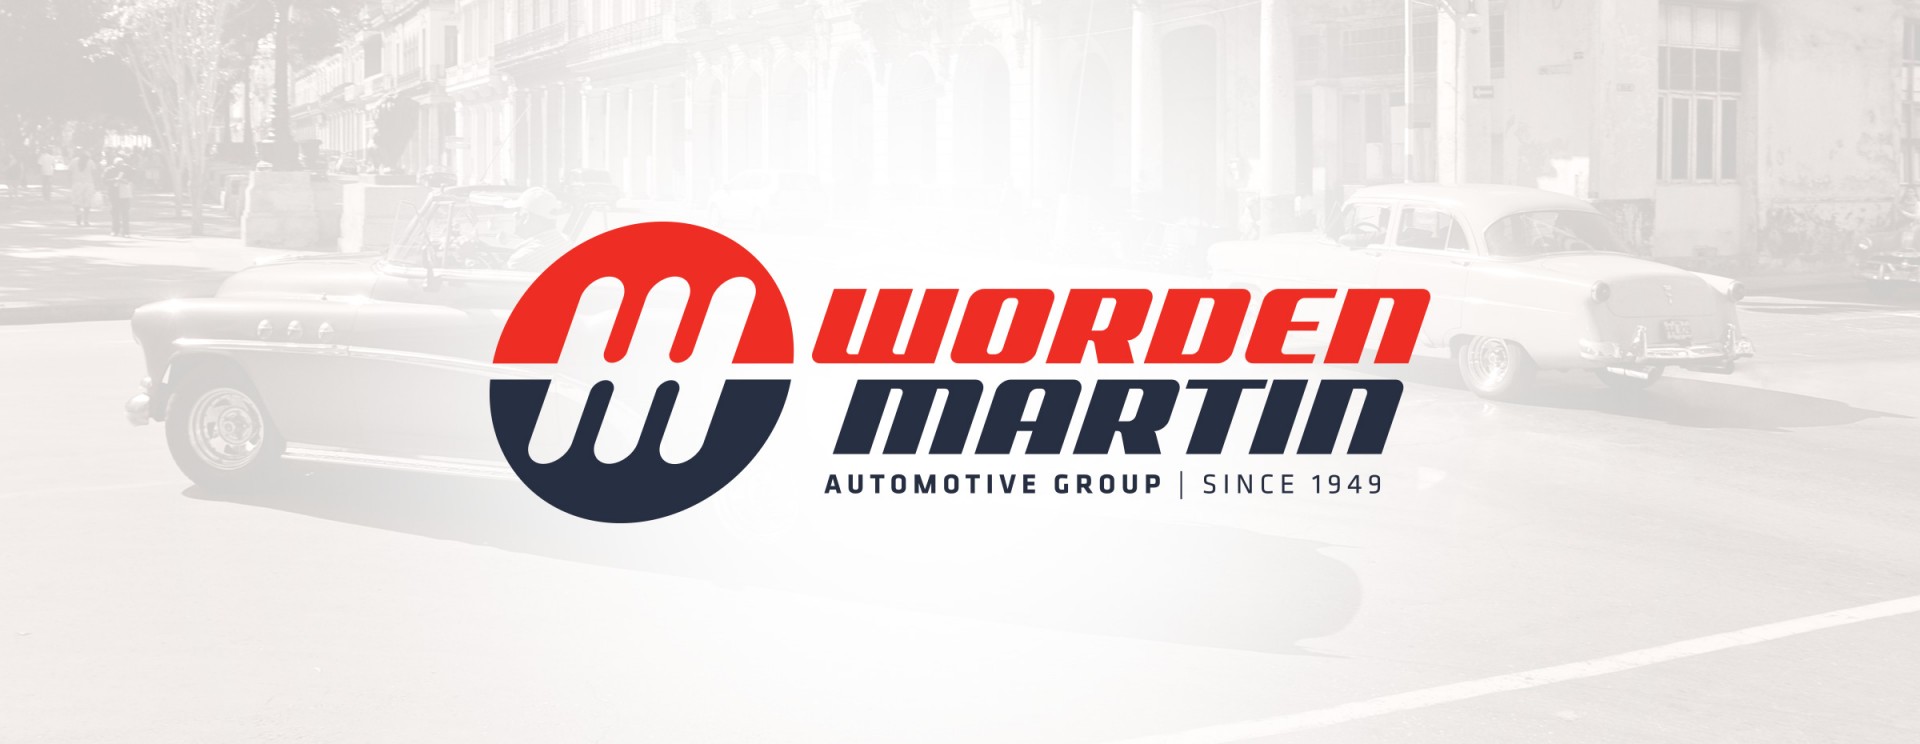 Worden Martin | Rebrand